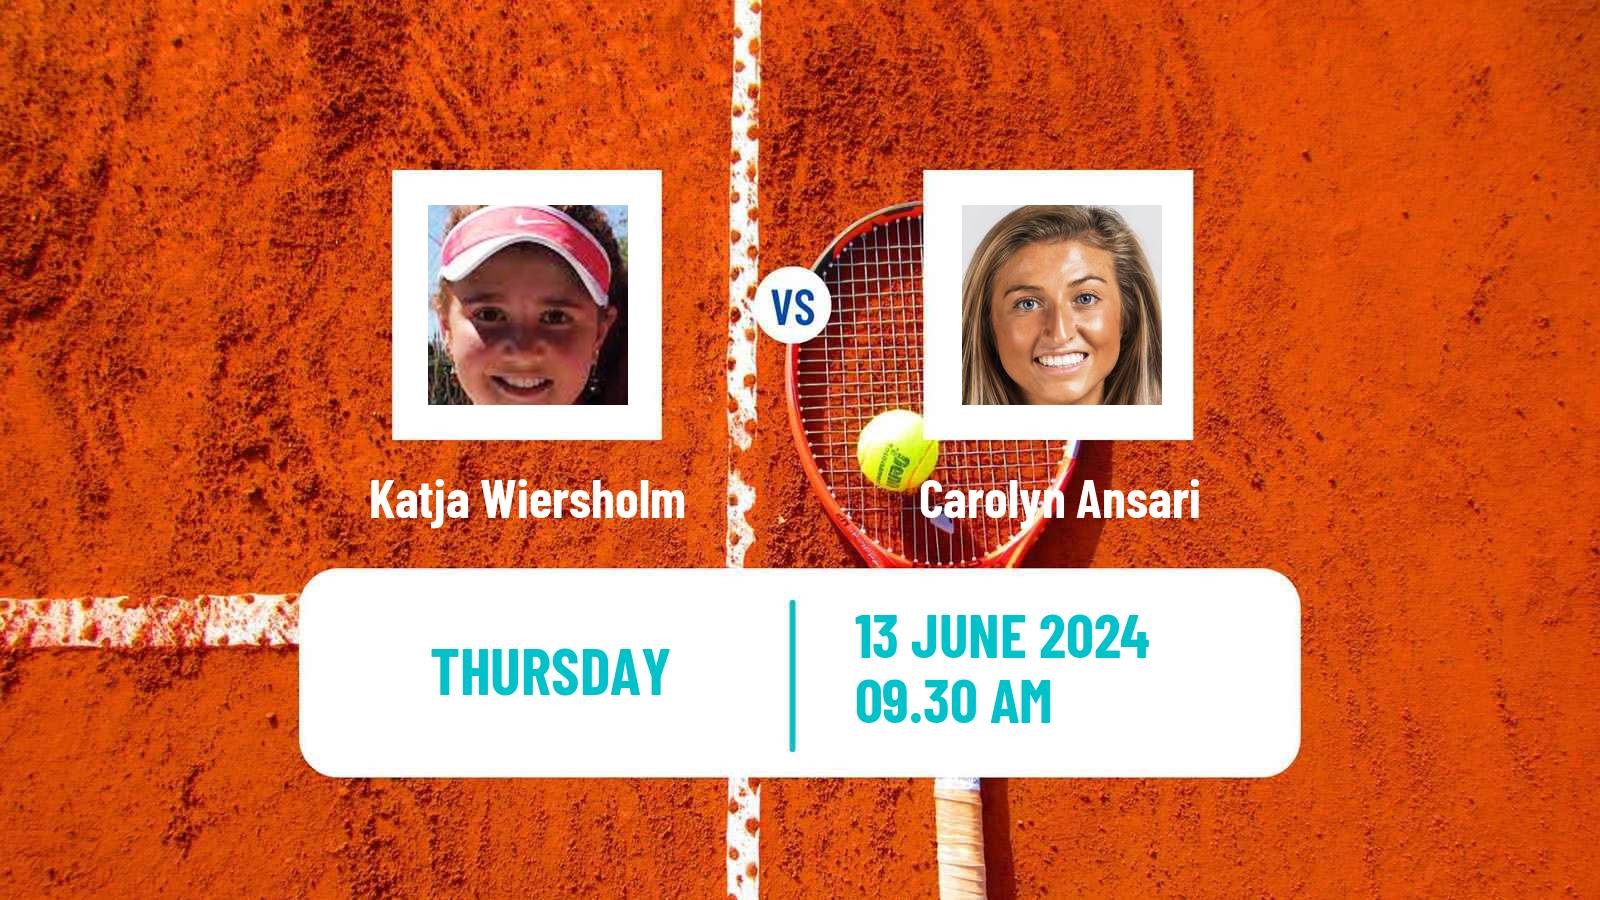 Tennis ITF W15 Santo Domingo 2 Women Katja Wiersholm - Carolyn Ansari